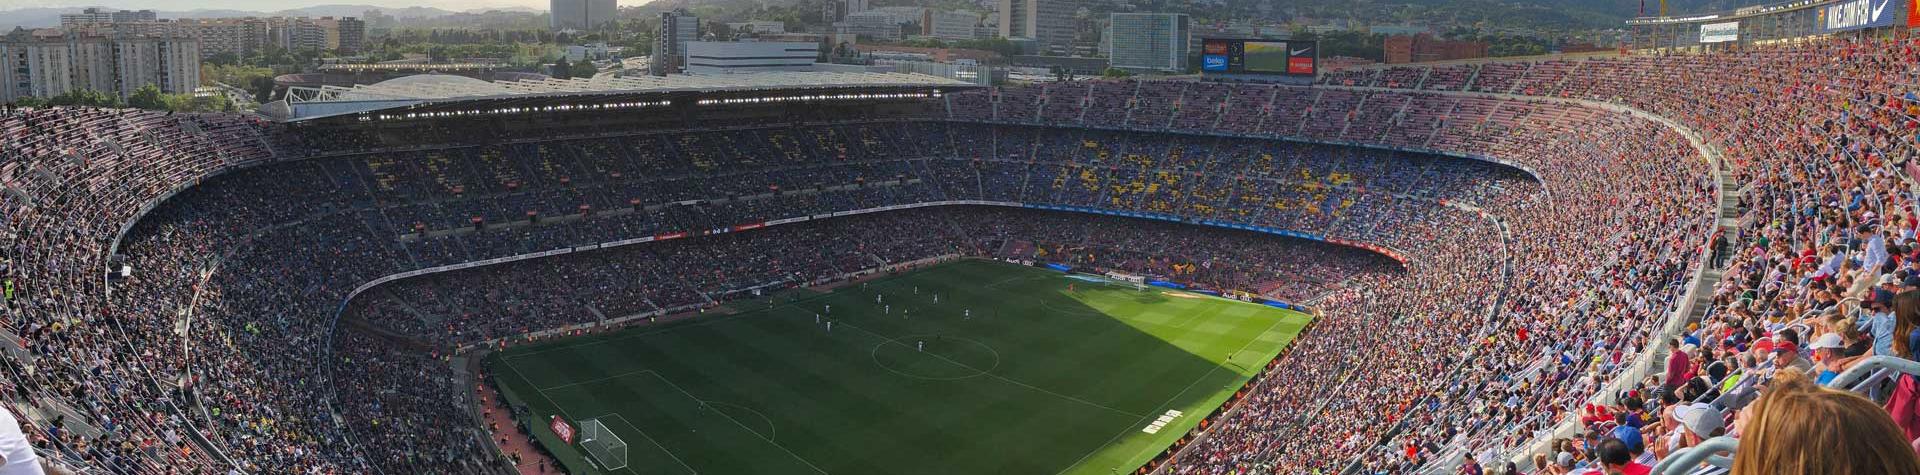 Fotbollsstadium Camp Nou i Barcelona.